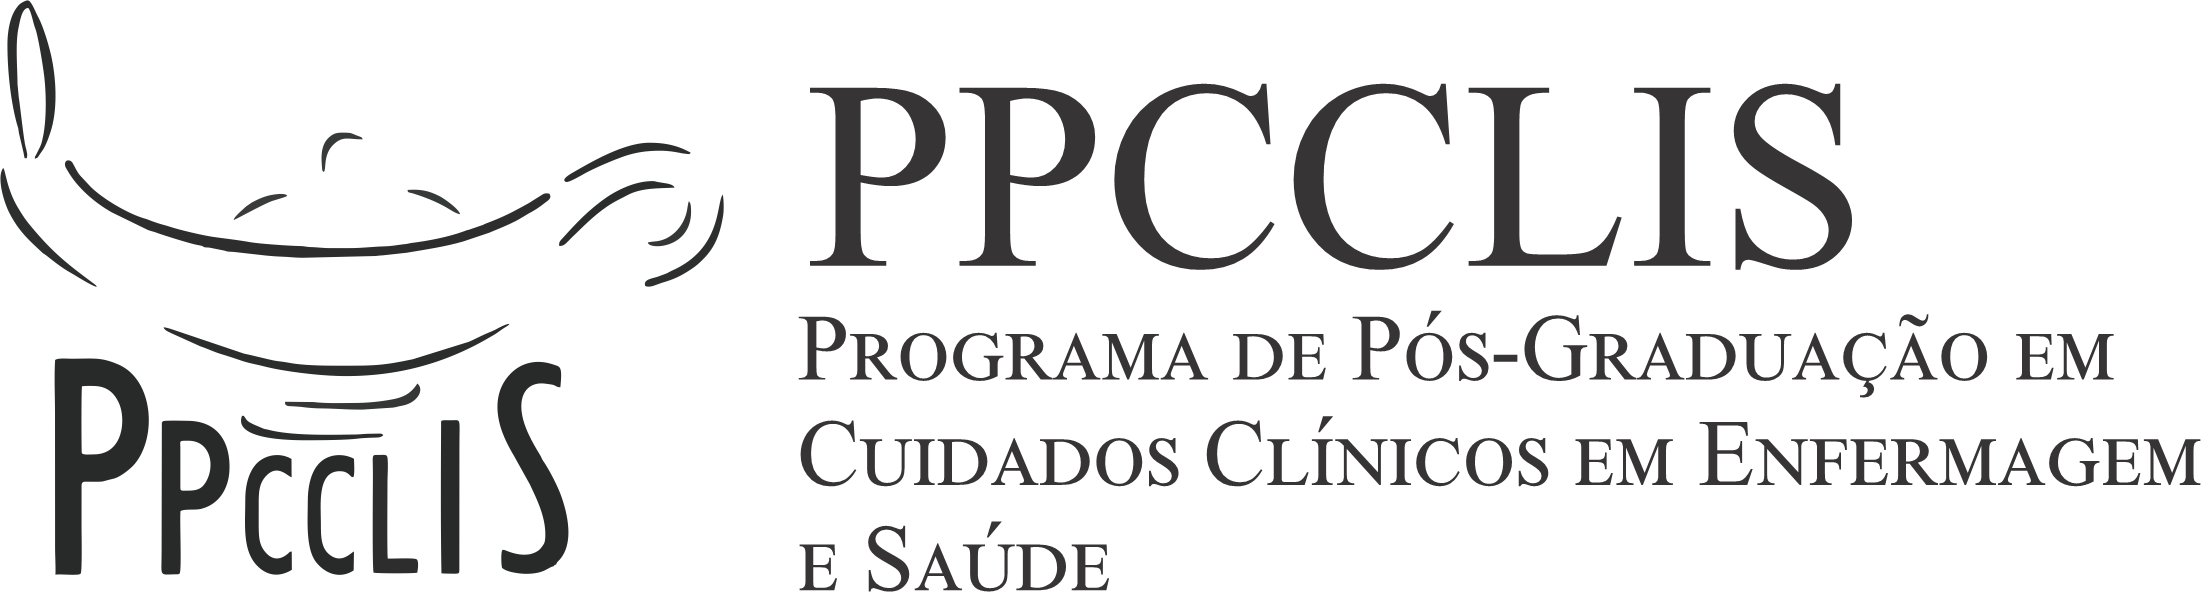 logo_ppcclis_2